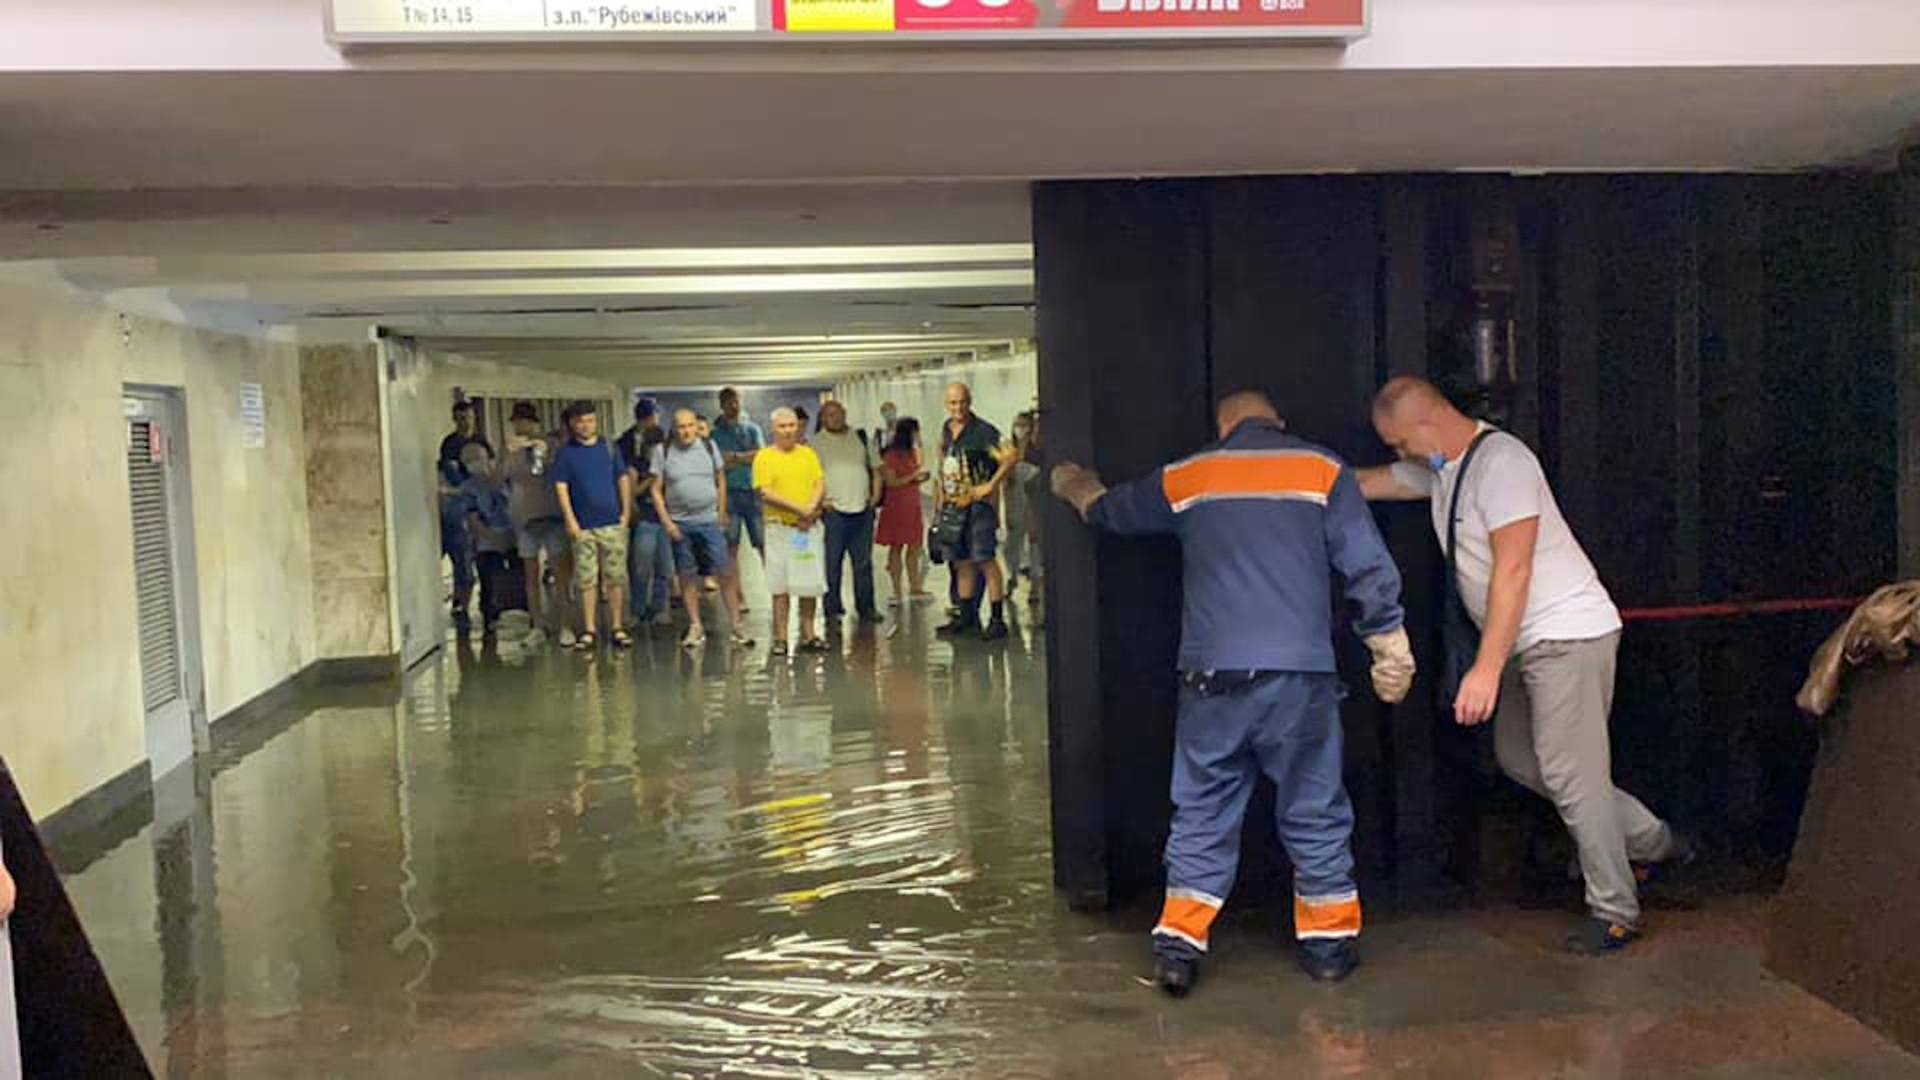 Киев потоп. Наводнение в метро. Киев метро затопило. Потоп в метро. Затопило станцию метро.